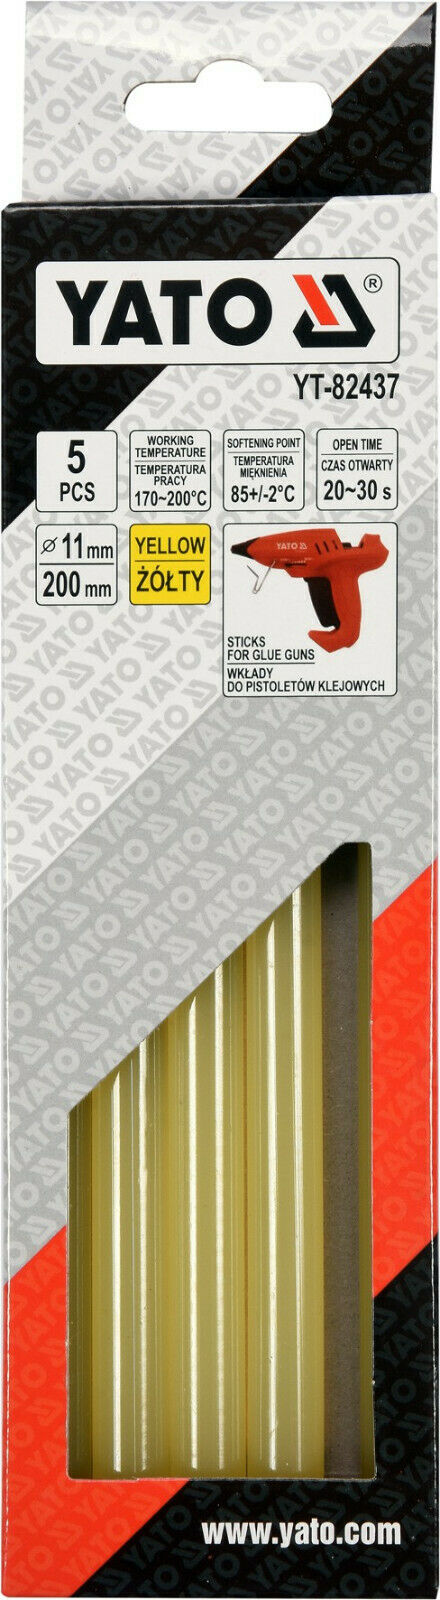 Yato yt-82437 hot adhesive sticks yellow 5Tlg hot glue gun hot glue adhesive sticks